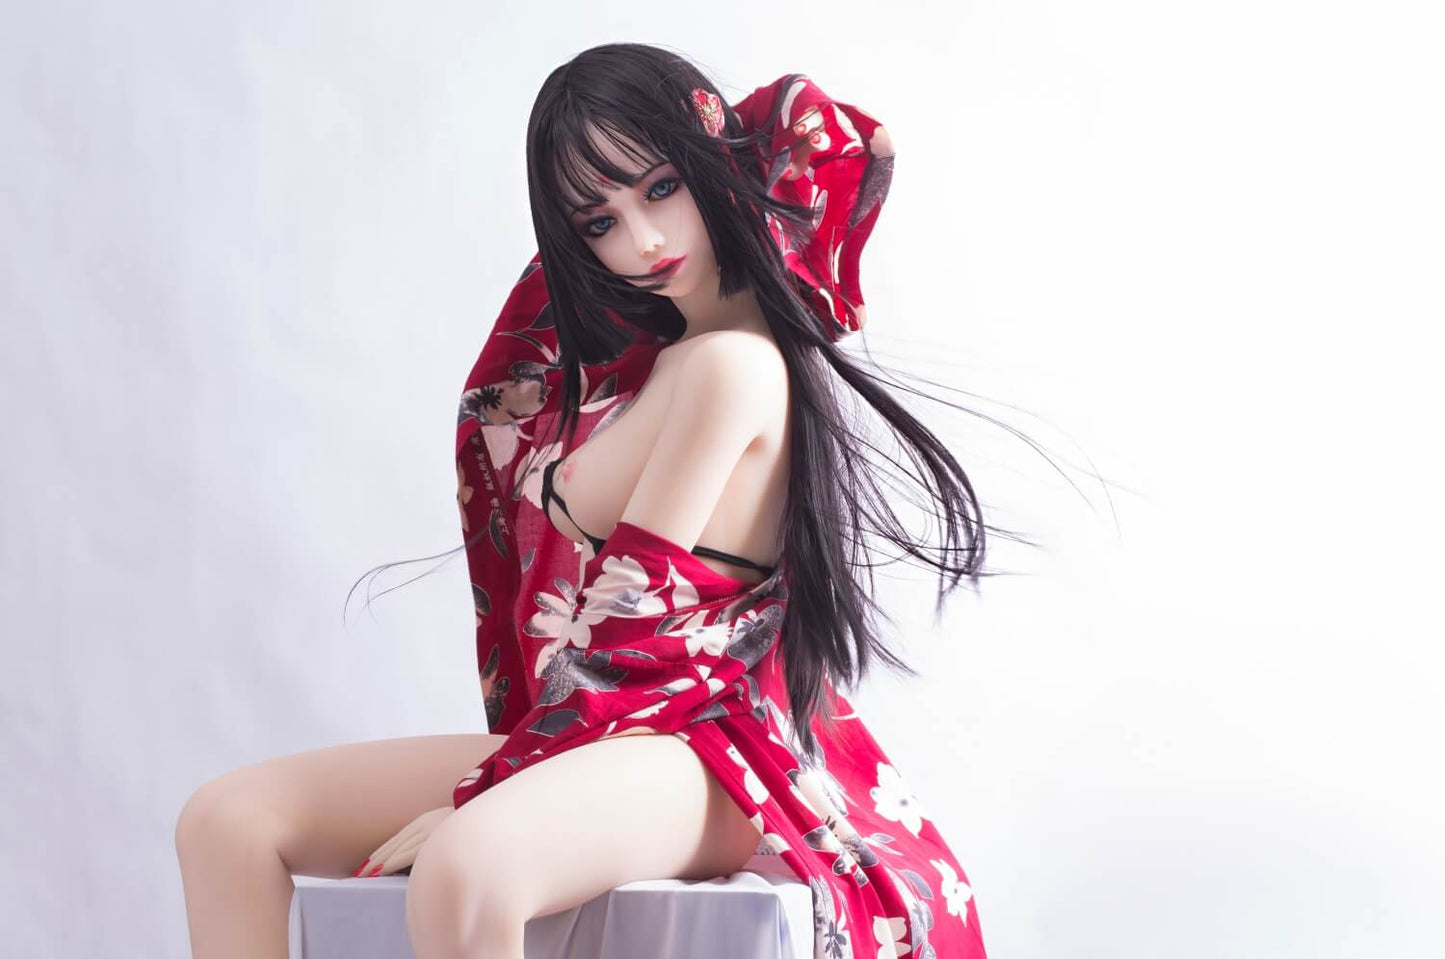 Sakura Sex Doll - Japanese Girl Adult Toys